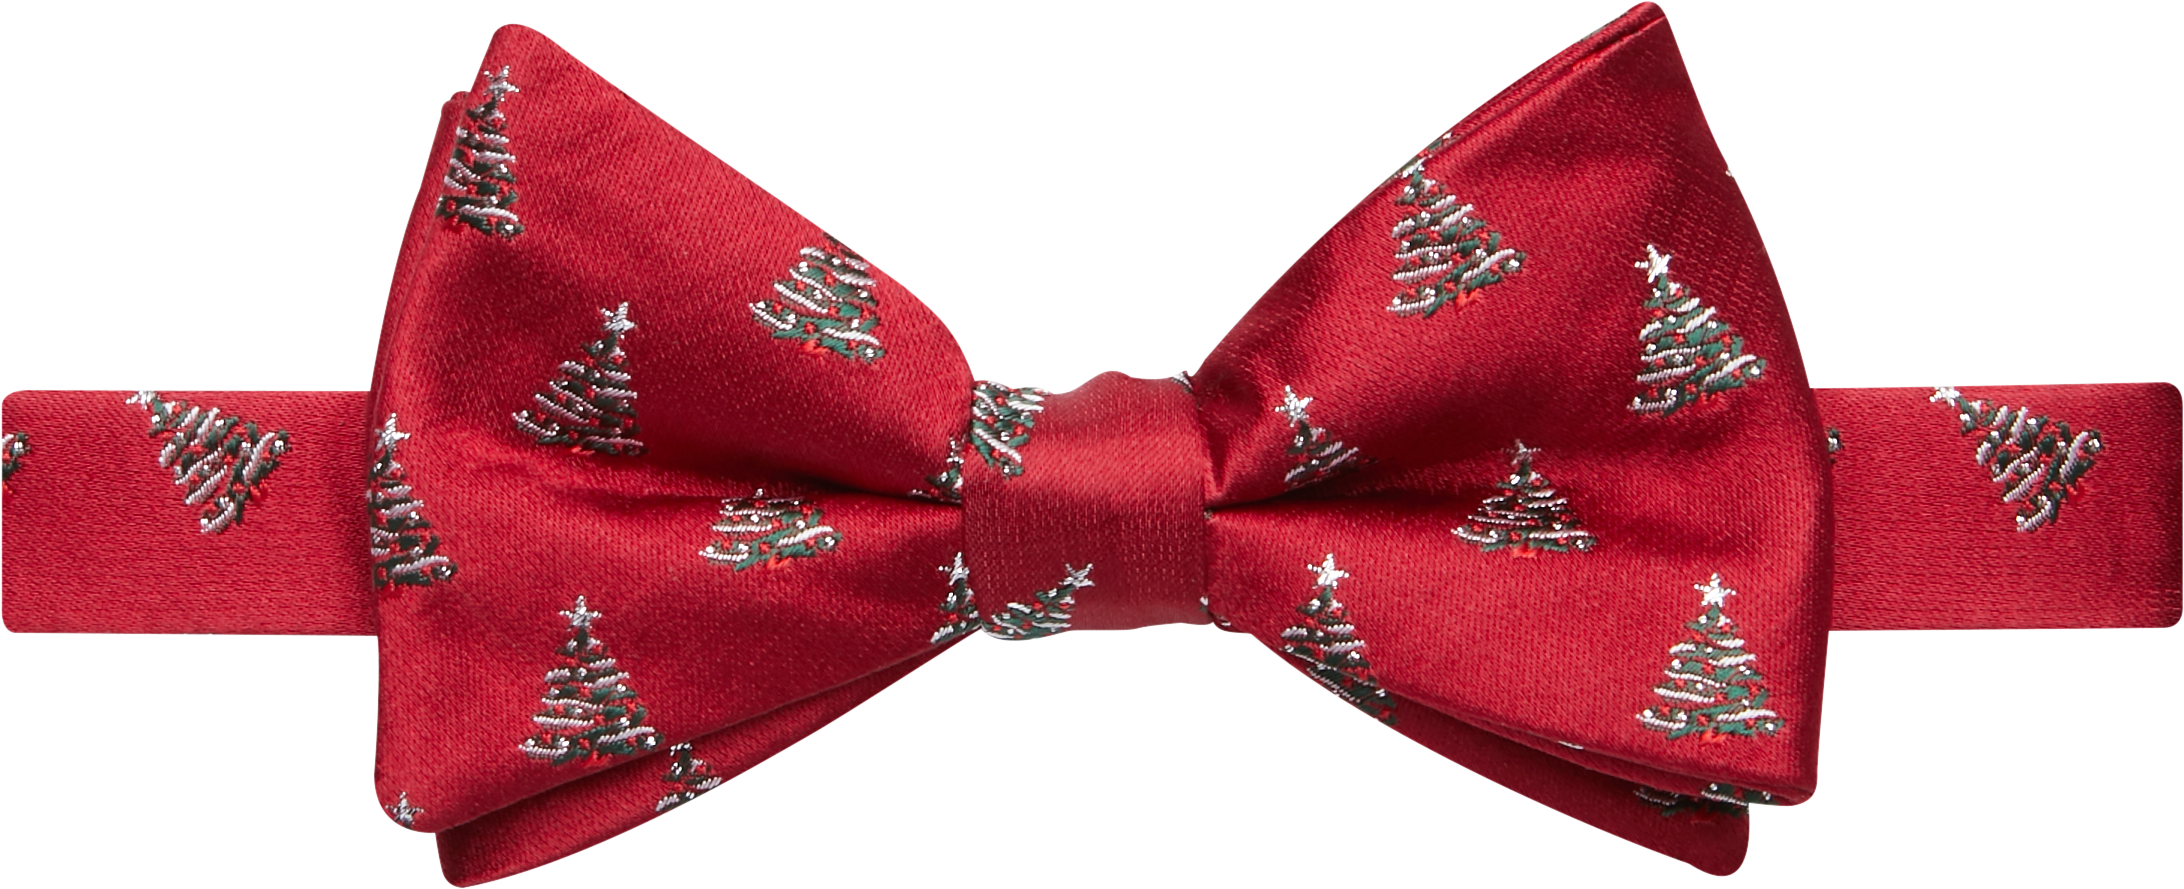 Nautica Red Christmas Tree Holiday Pre-Tied Bow Tie - Men's Brands ...